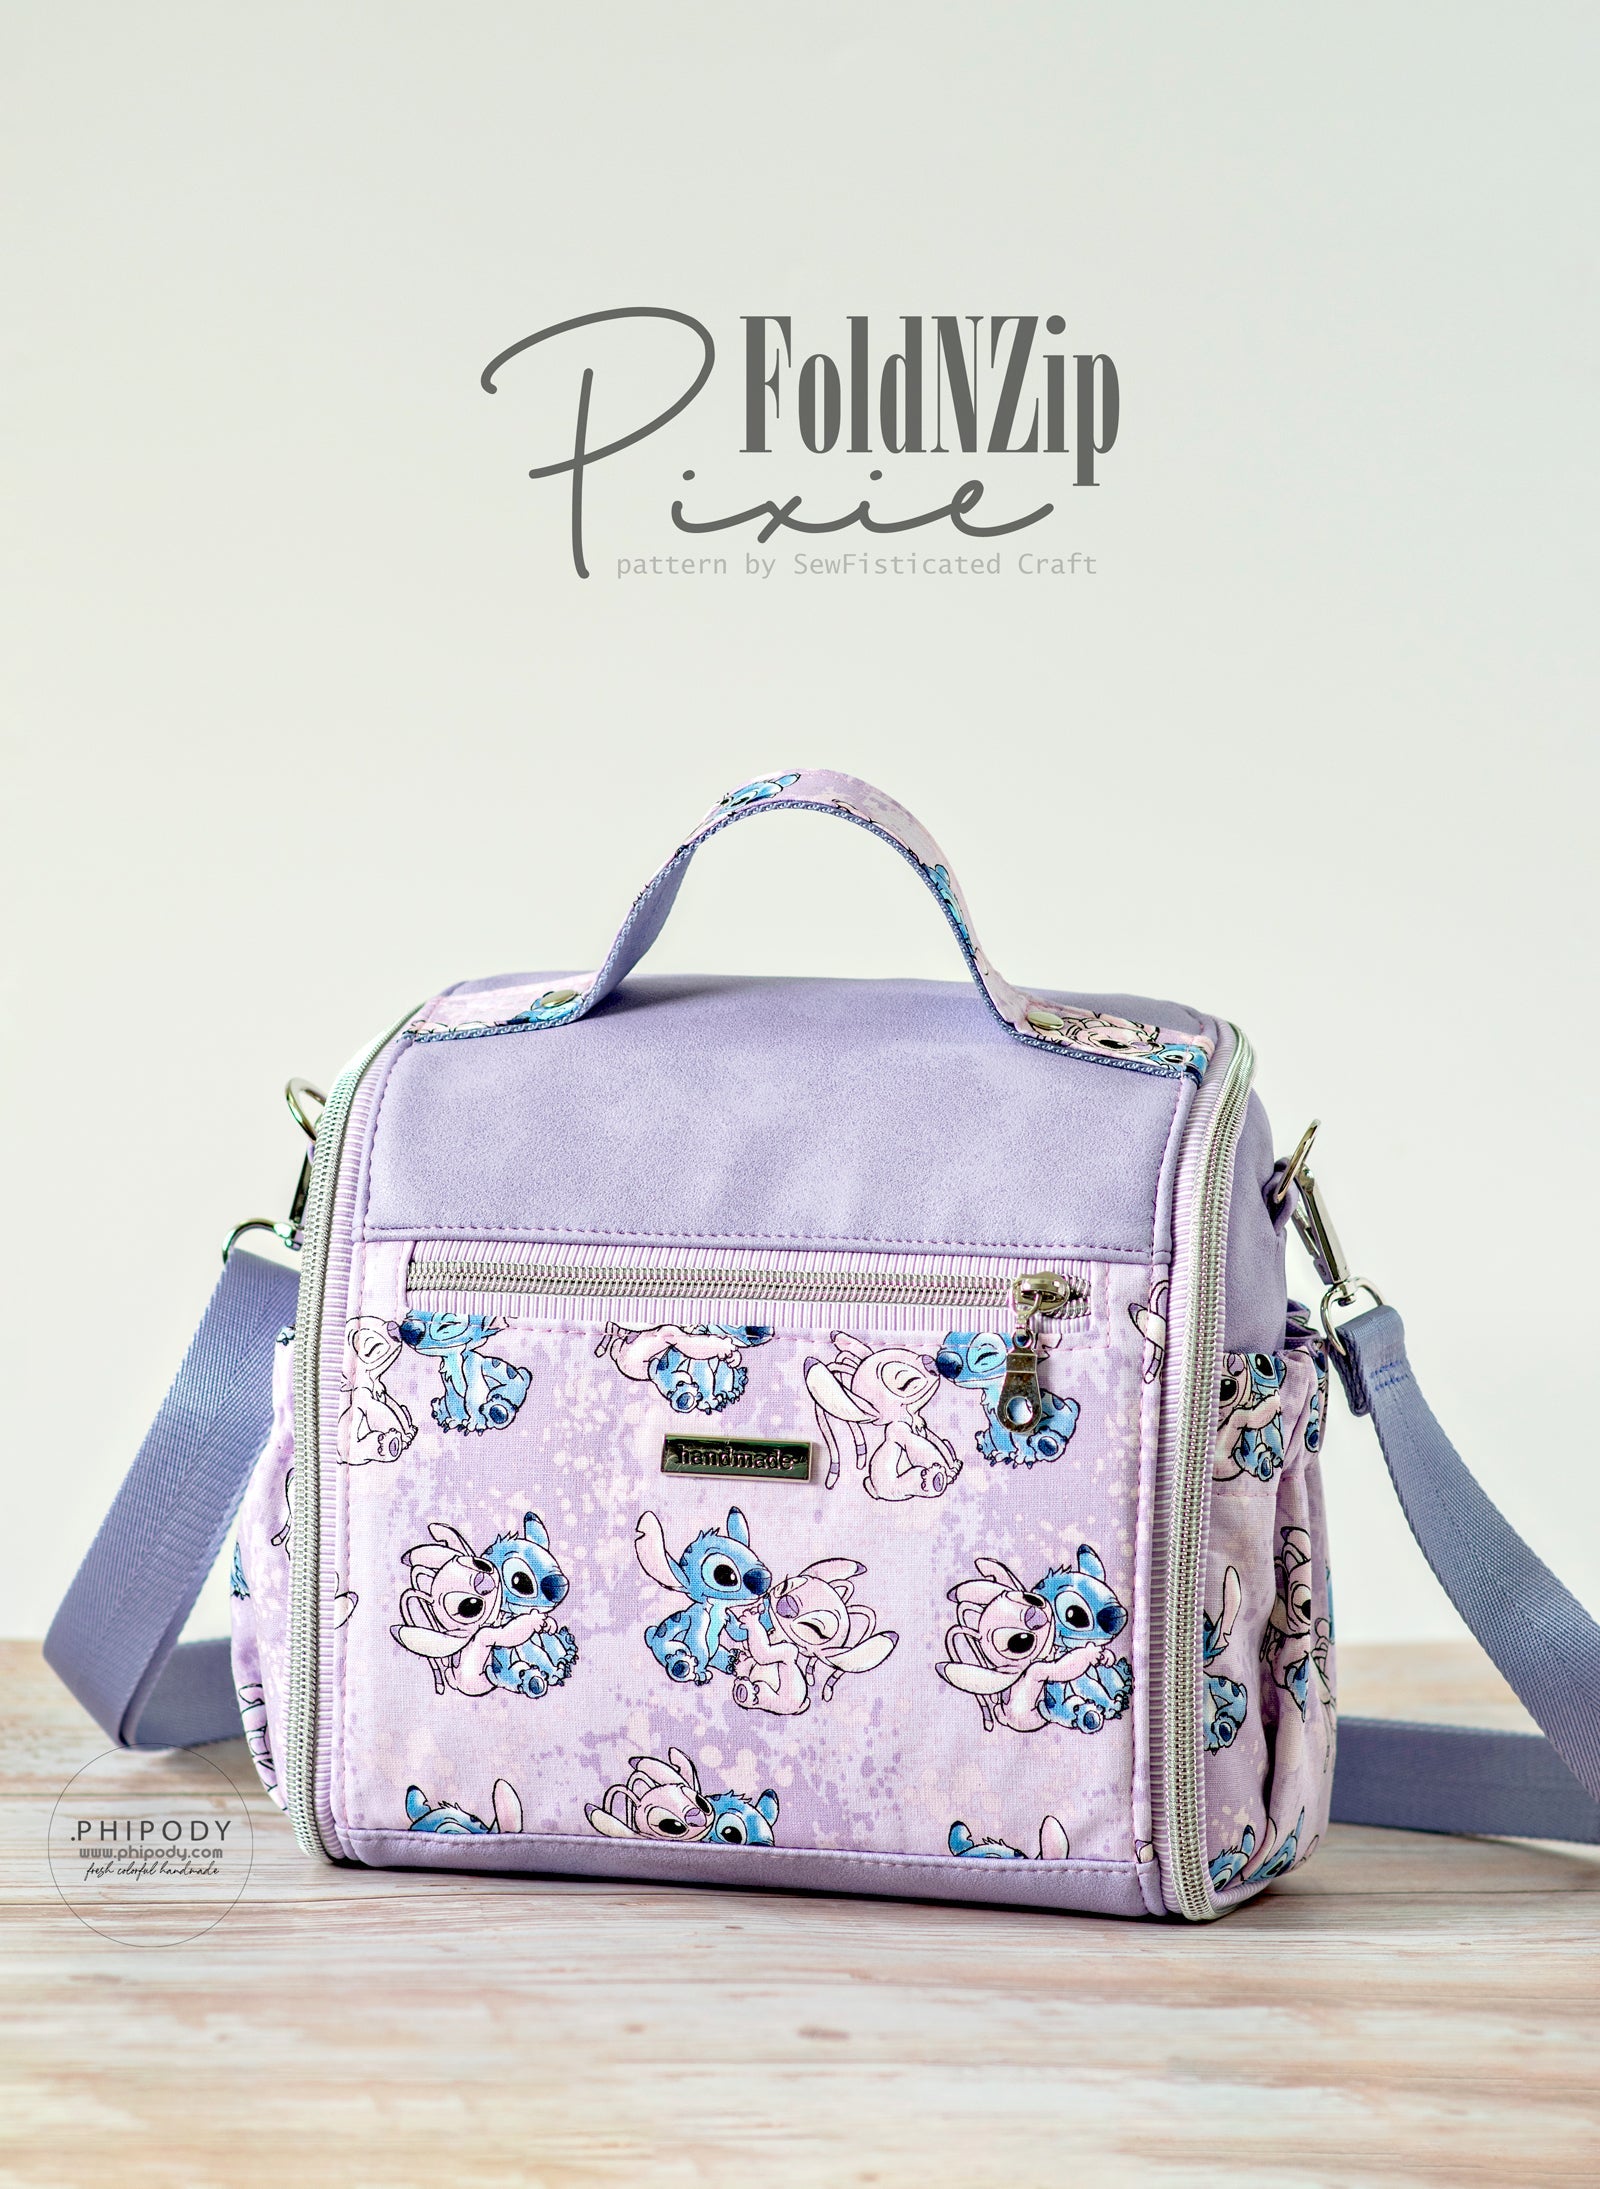 FoldNZip Pixie (Fabric Version) – Sewfisticated Craft Designs